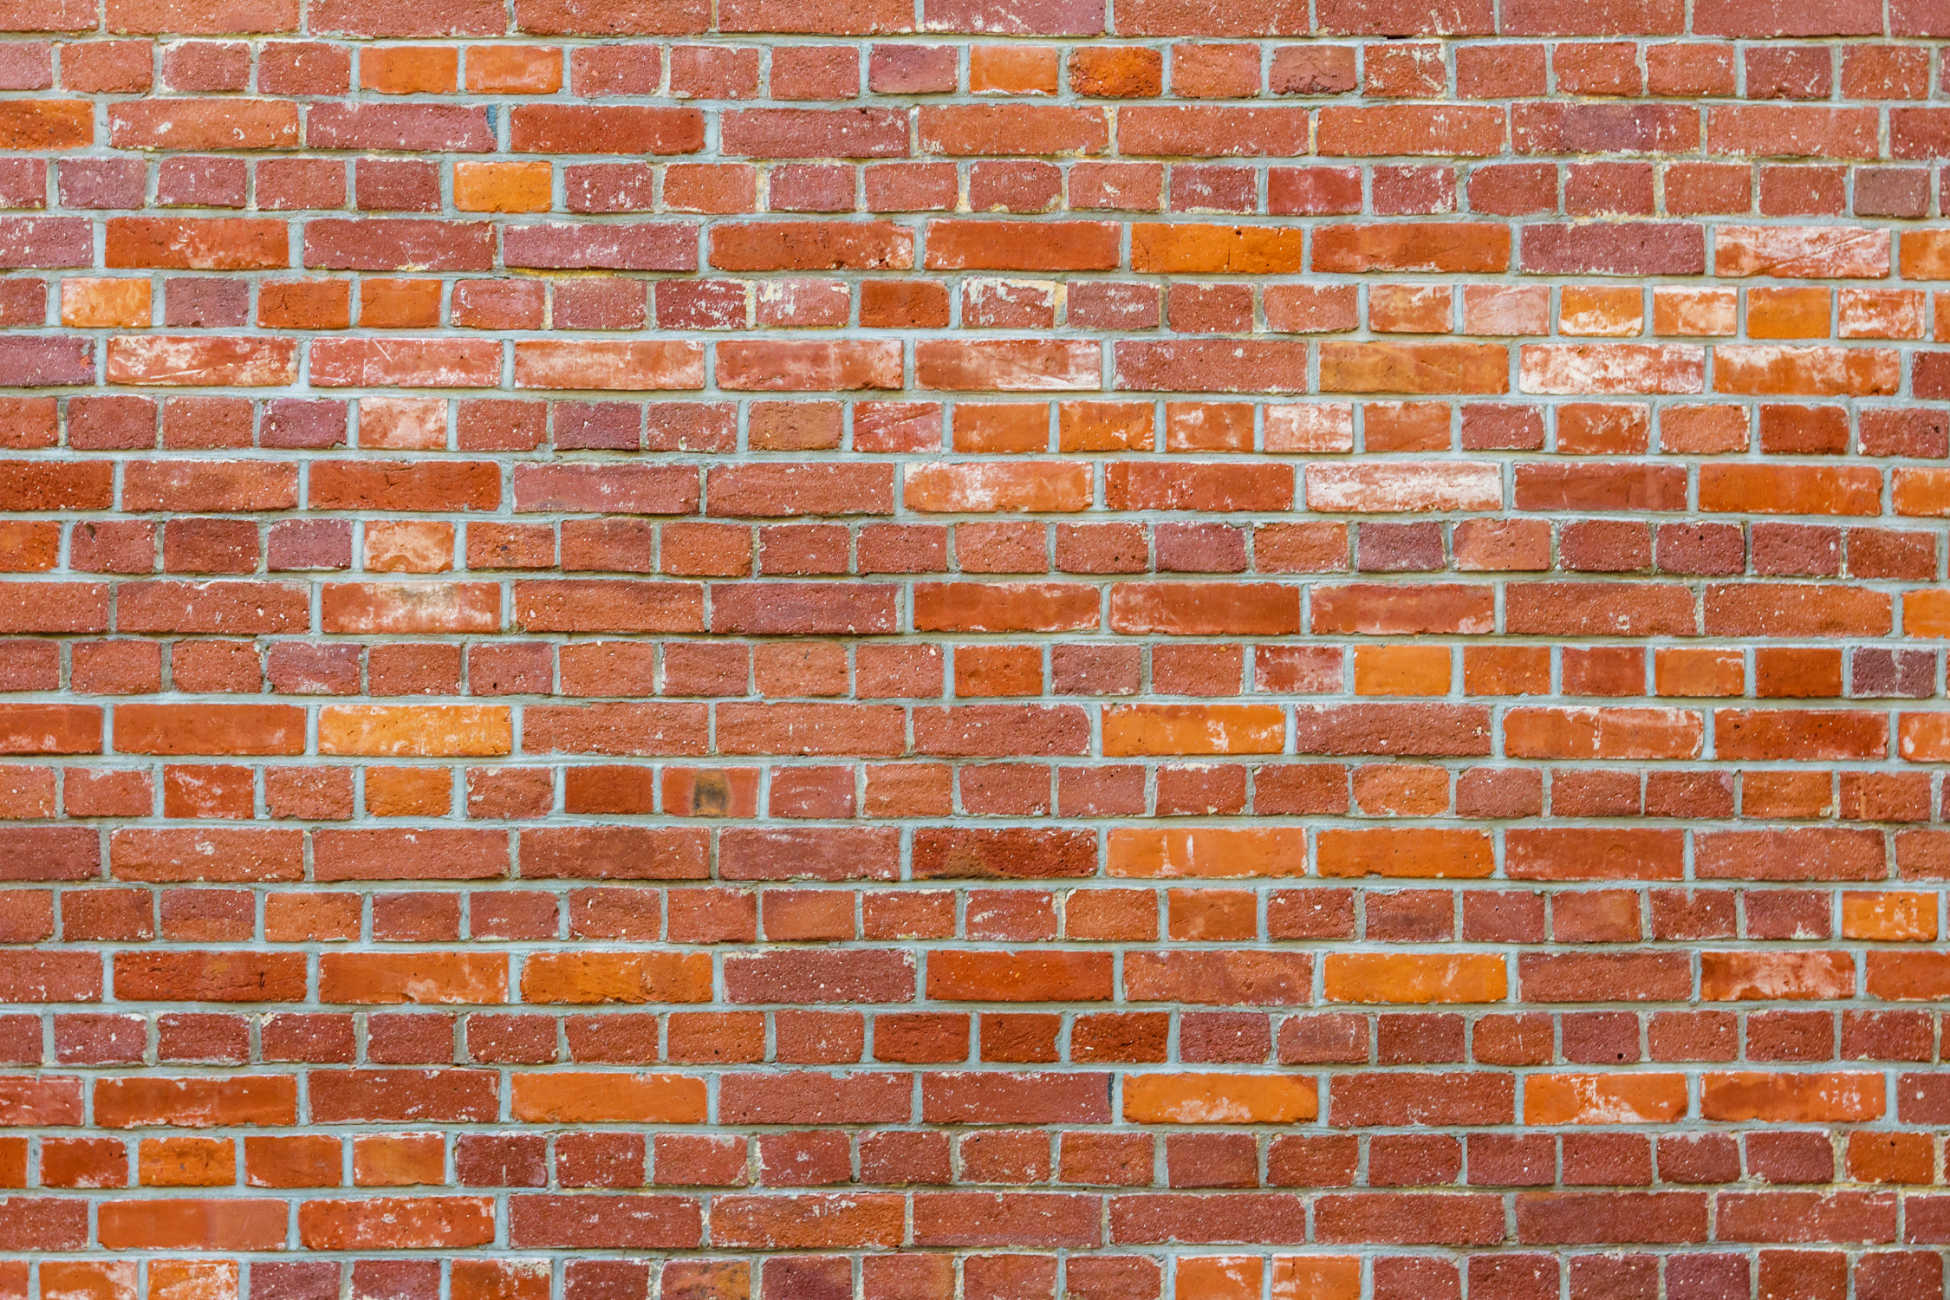 Red Brick Wall 2022 09 16 03 55 34 Utc 